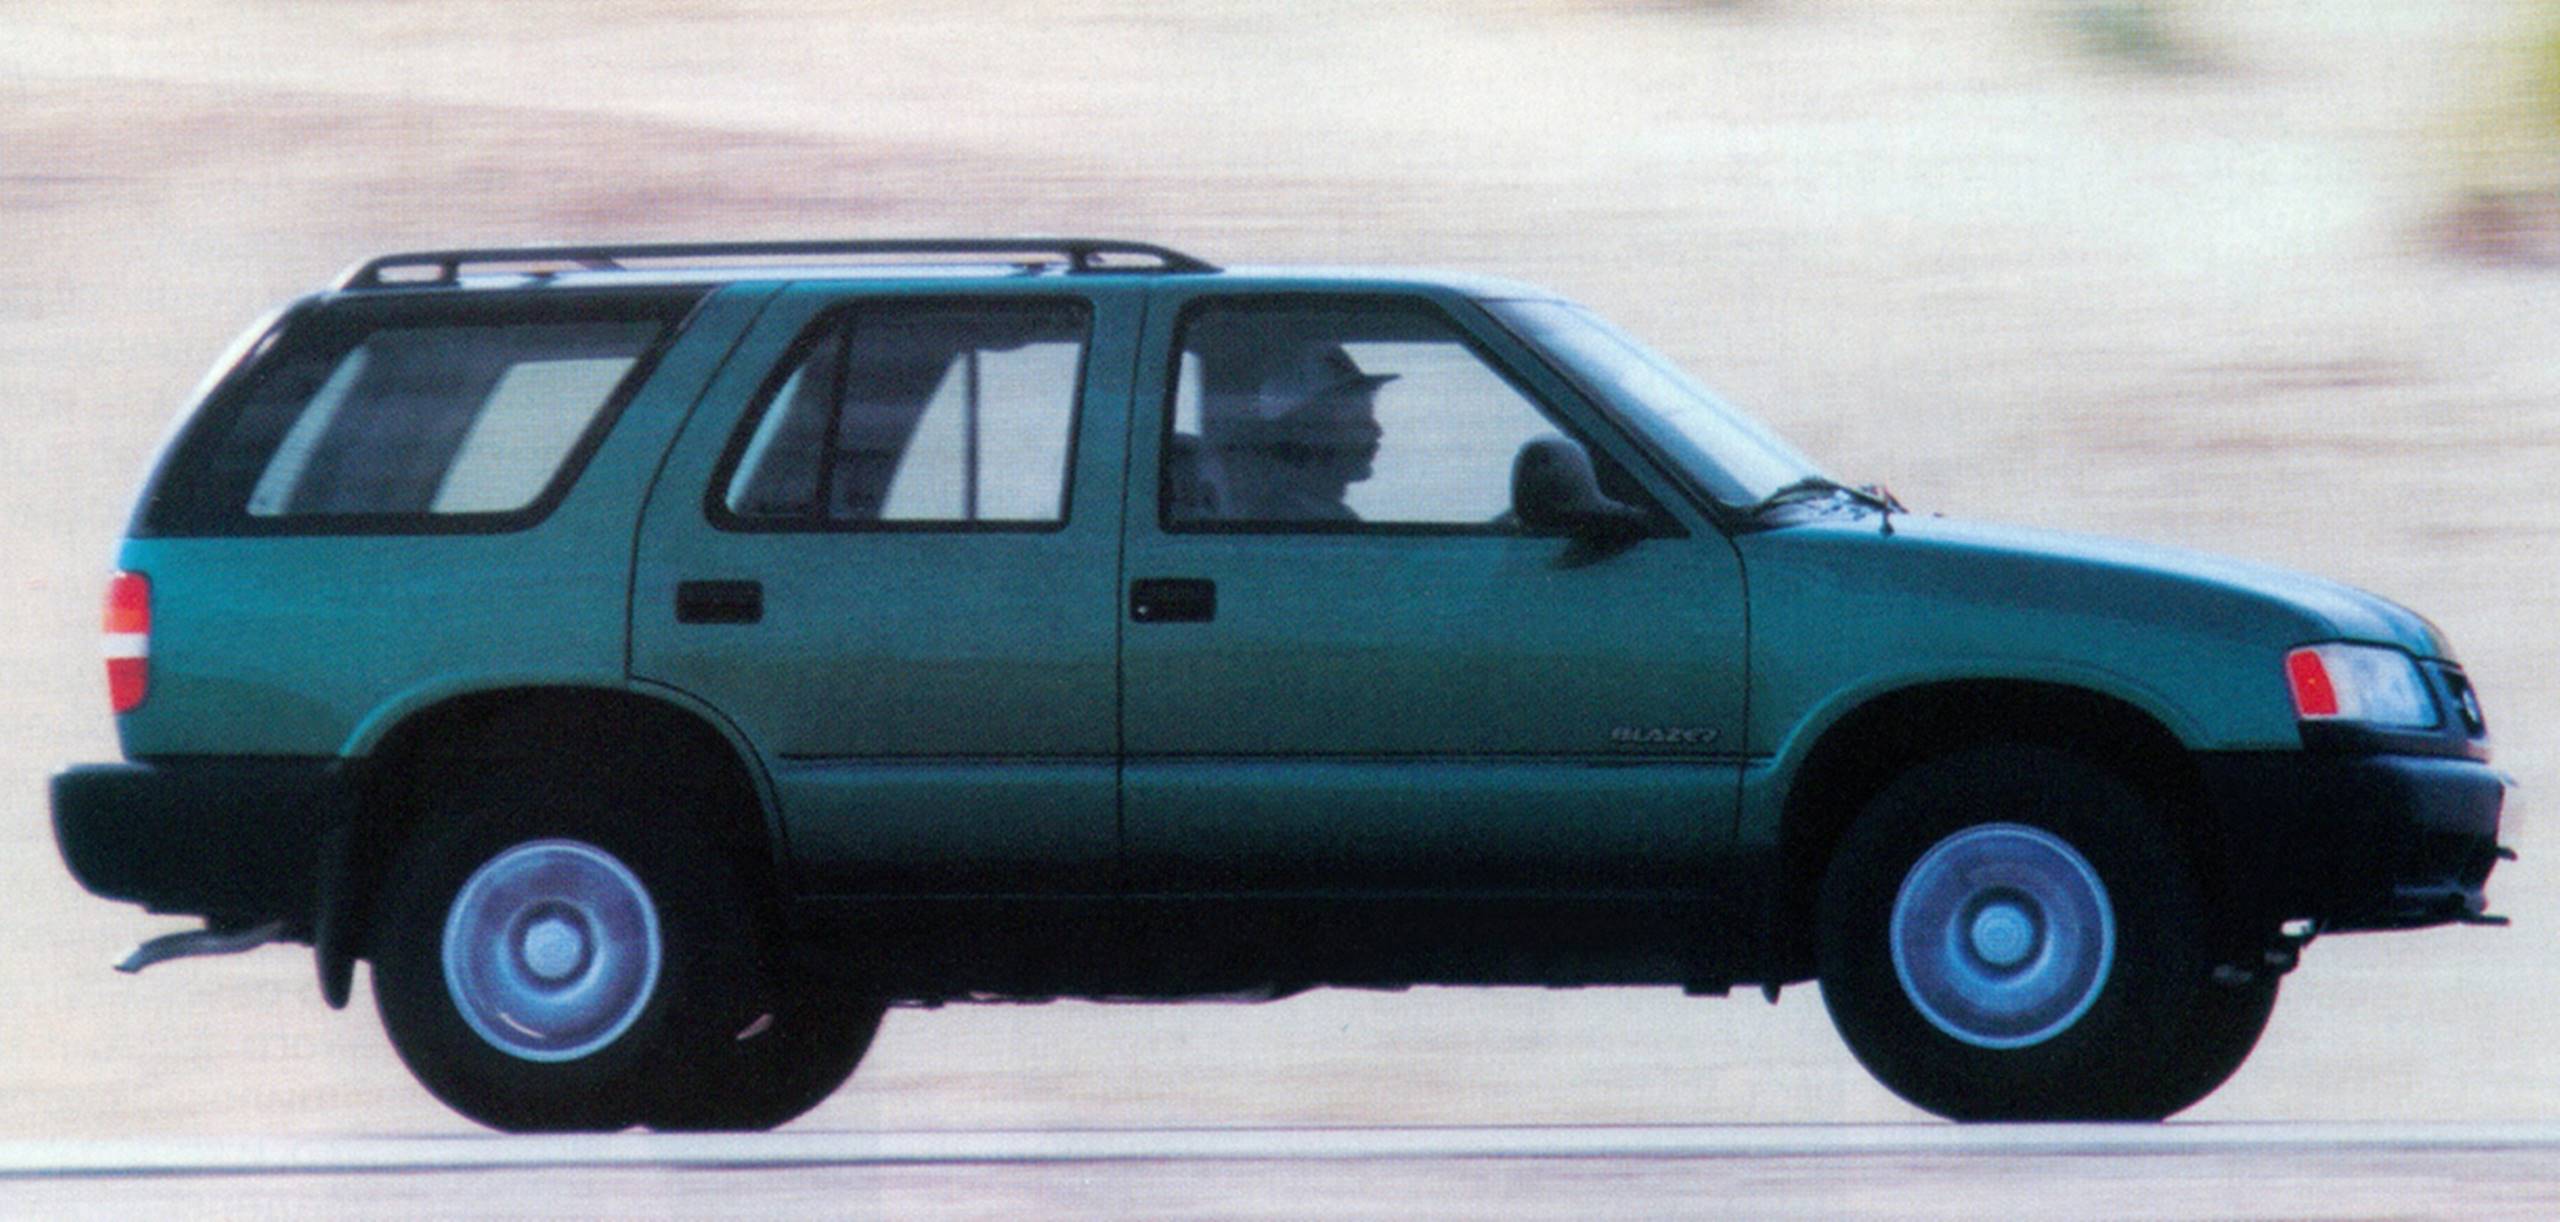 Chevrolet Blazer 1996 a 2000 2.8 Turbo Diesel - consumo